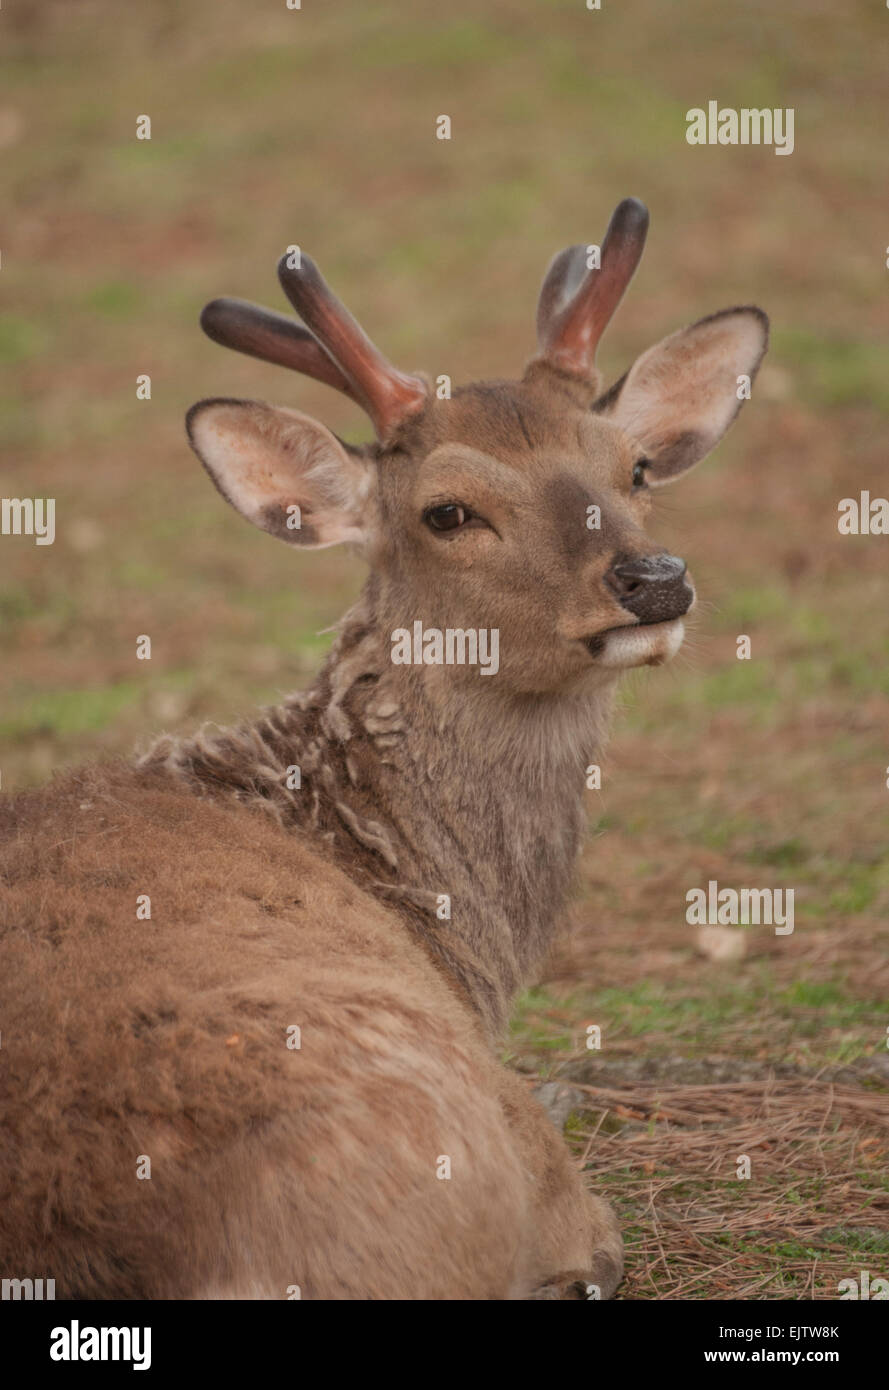 A Japanese deer (Nihon Shika or Shika Deer) looks back at the camera at the deer park in Nara, Japan. Stock Photo